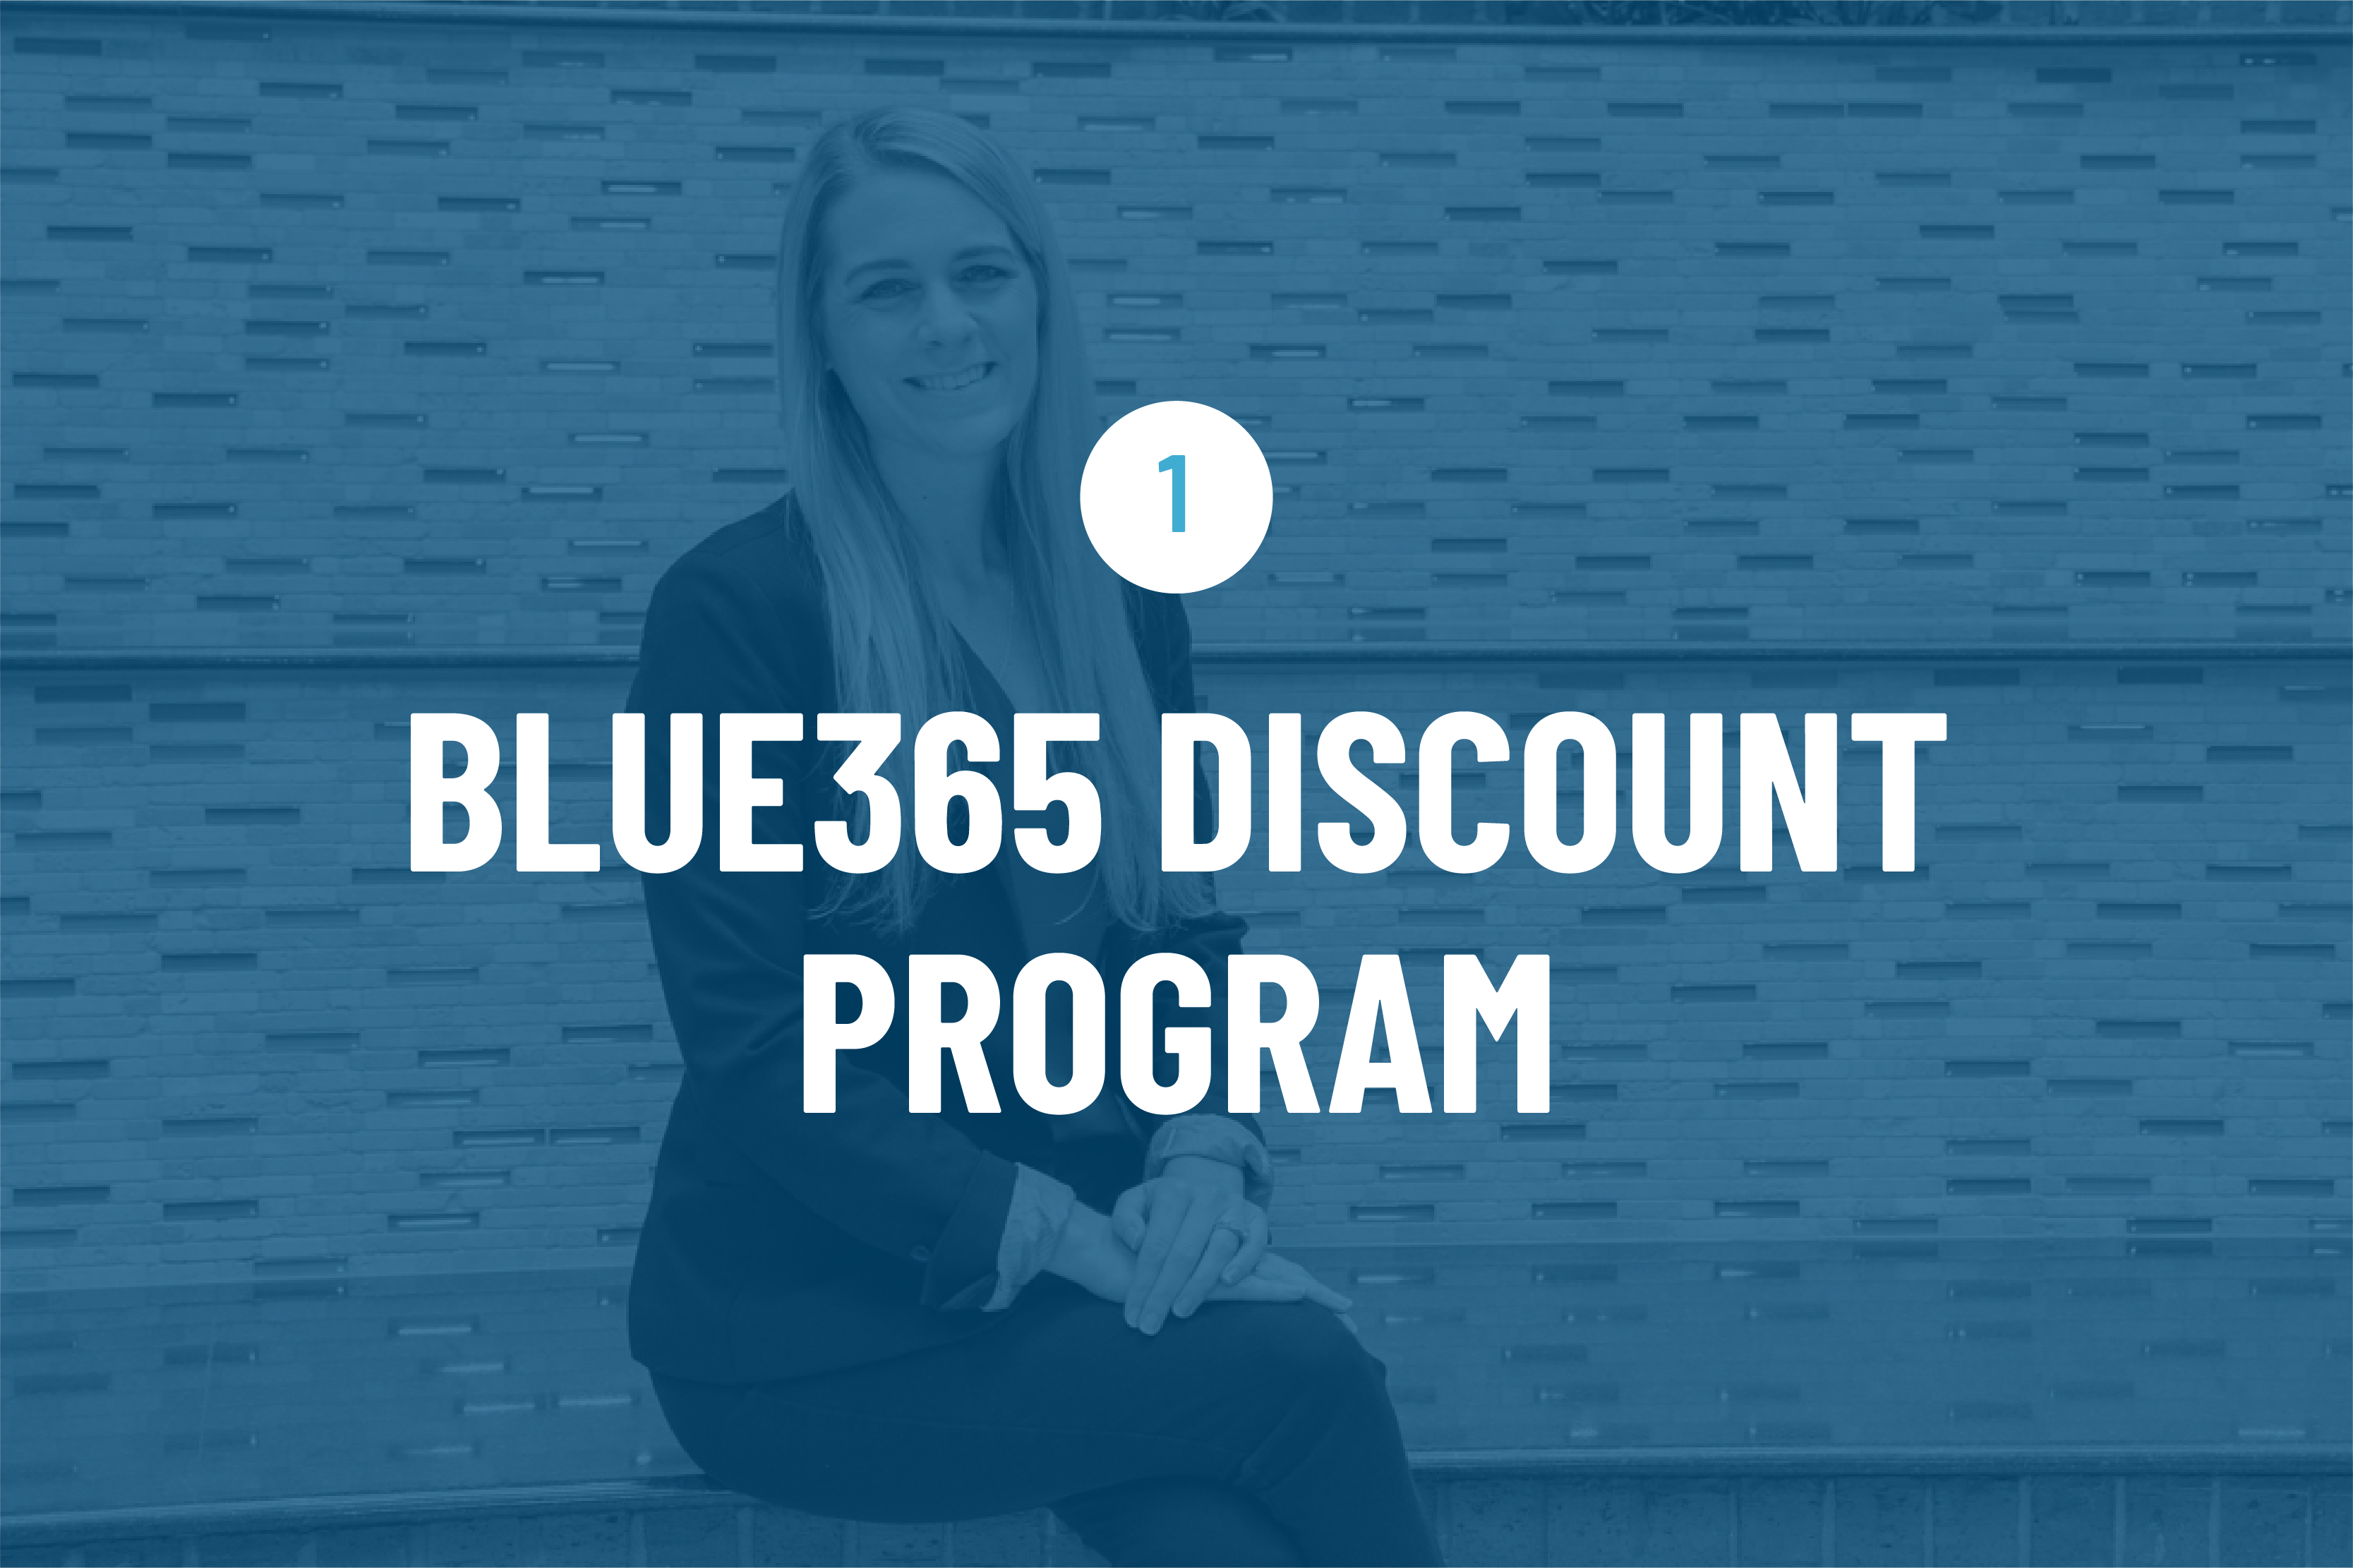 1 - Blue365 Discount Program